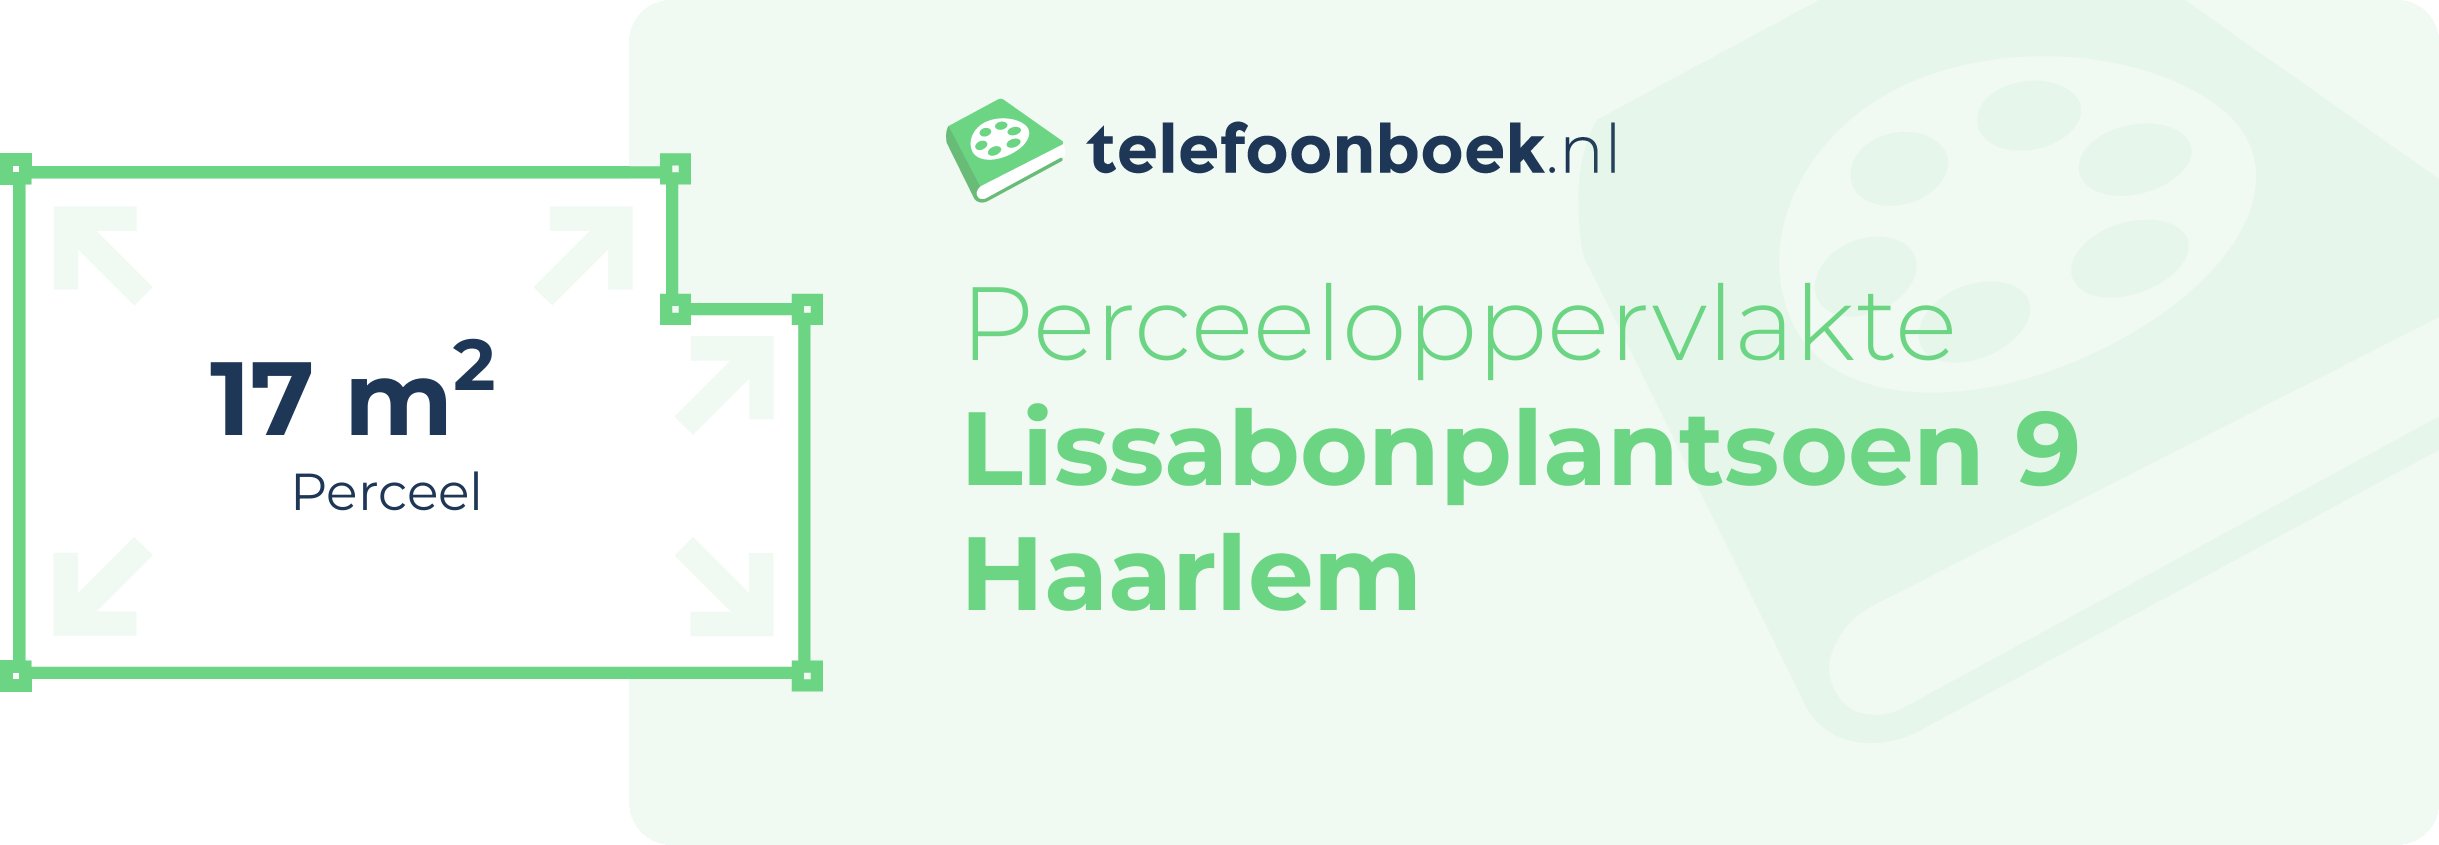 Perceeloppervlakte Lissabonplantsoen 9 Haarlem